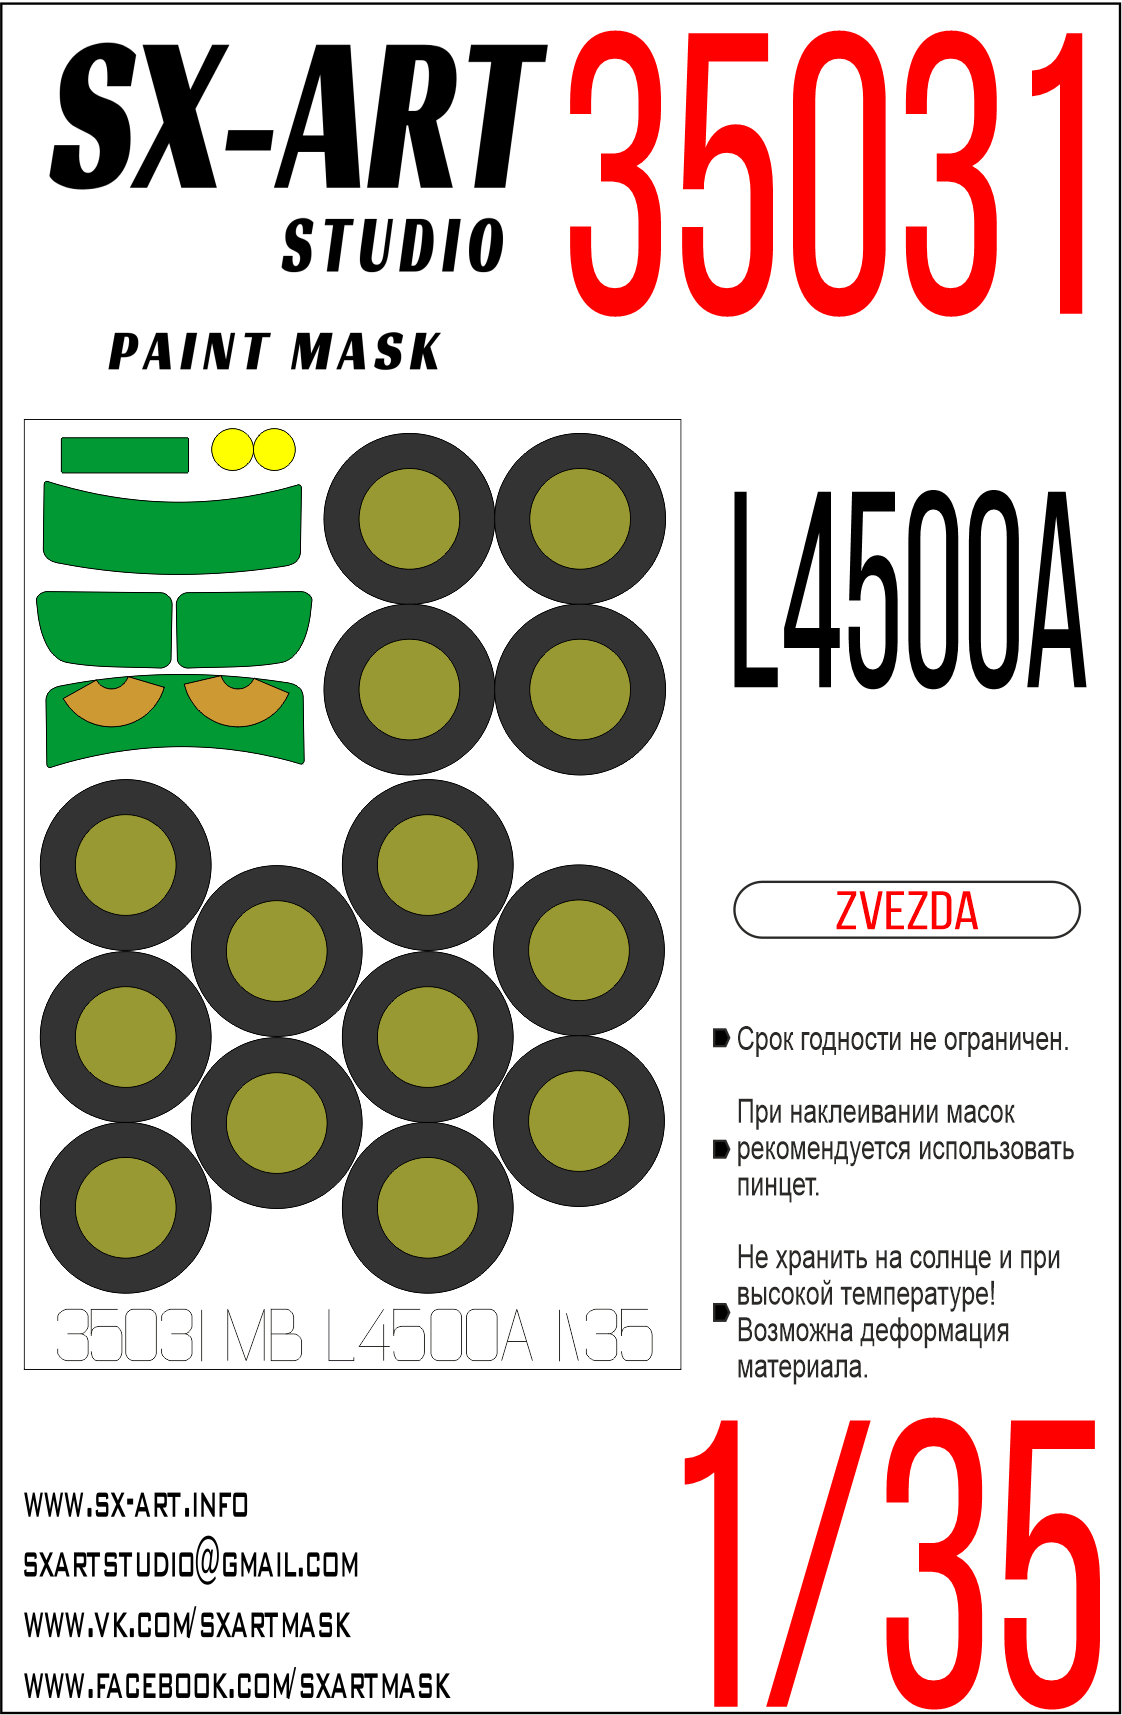 Paint Mask 1/35 MB L4500A (Zvezda)